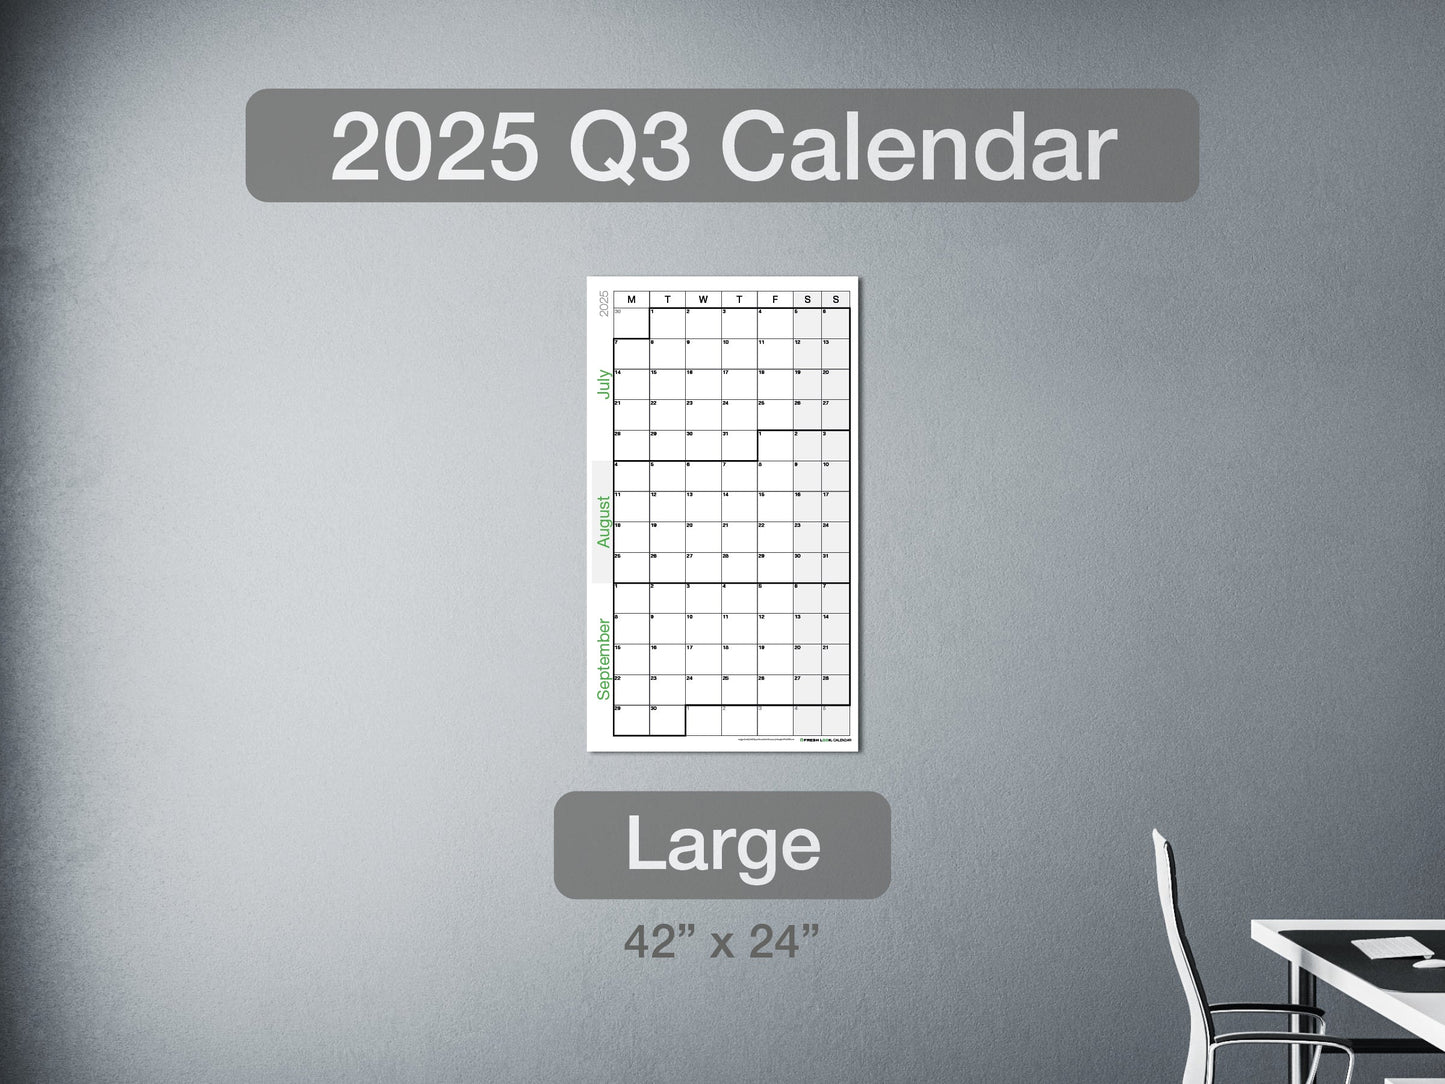 2025 Q3 Calendar Large